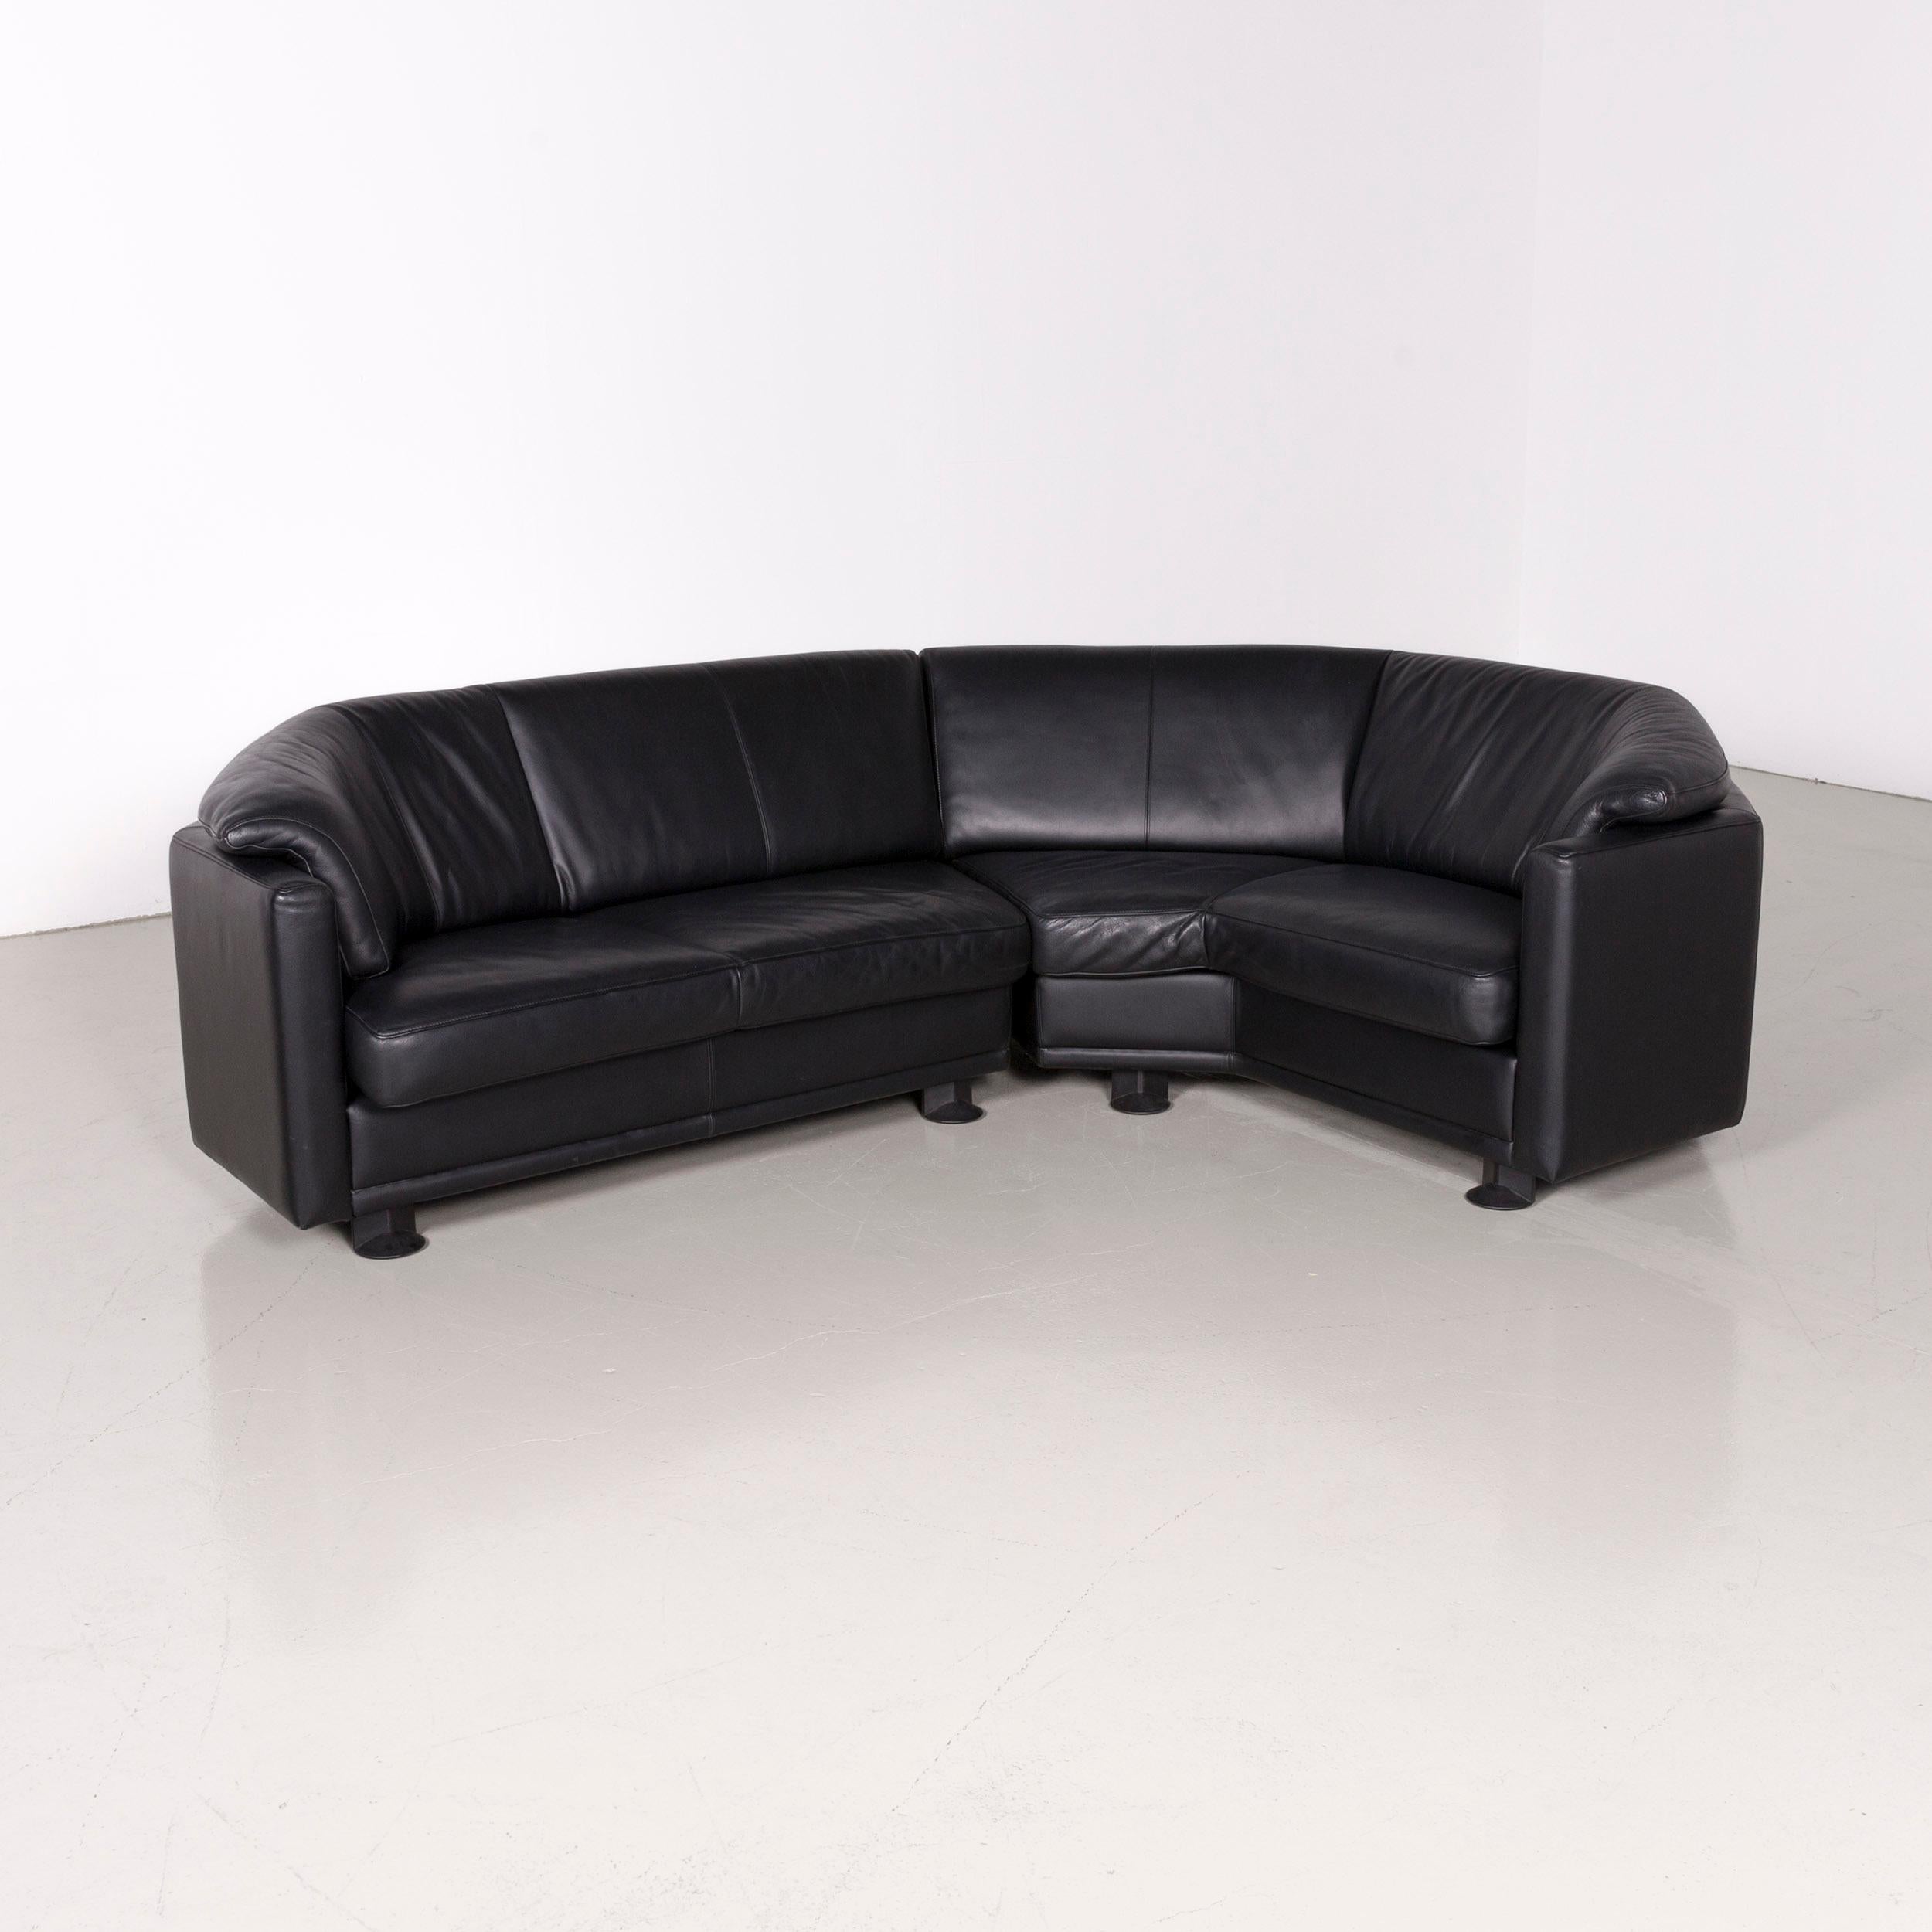 We bring to you a Leolux designer corner couch leather black sofa.